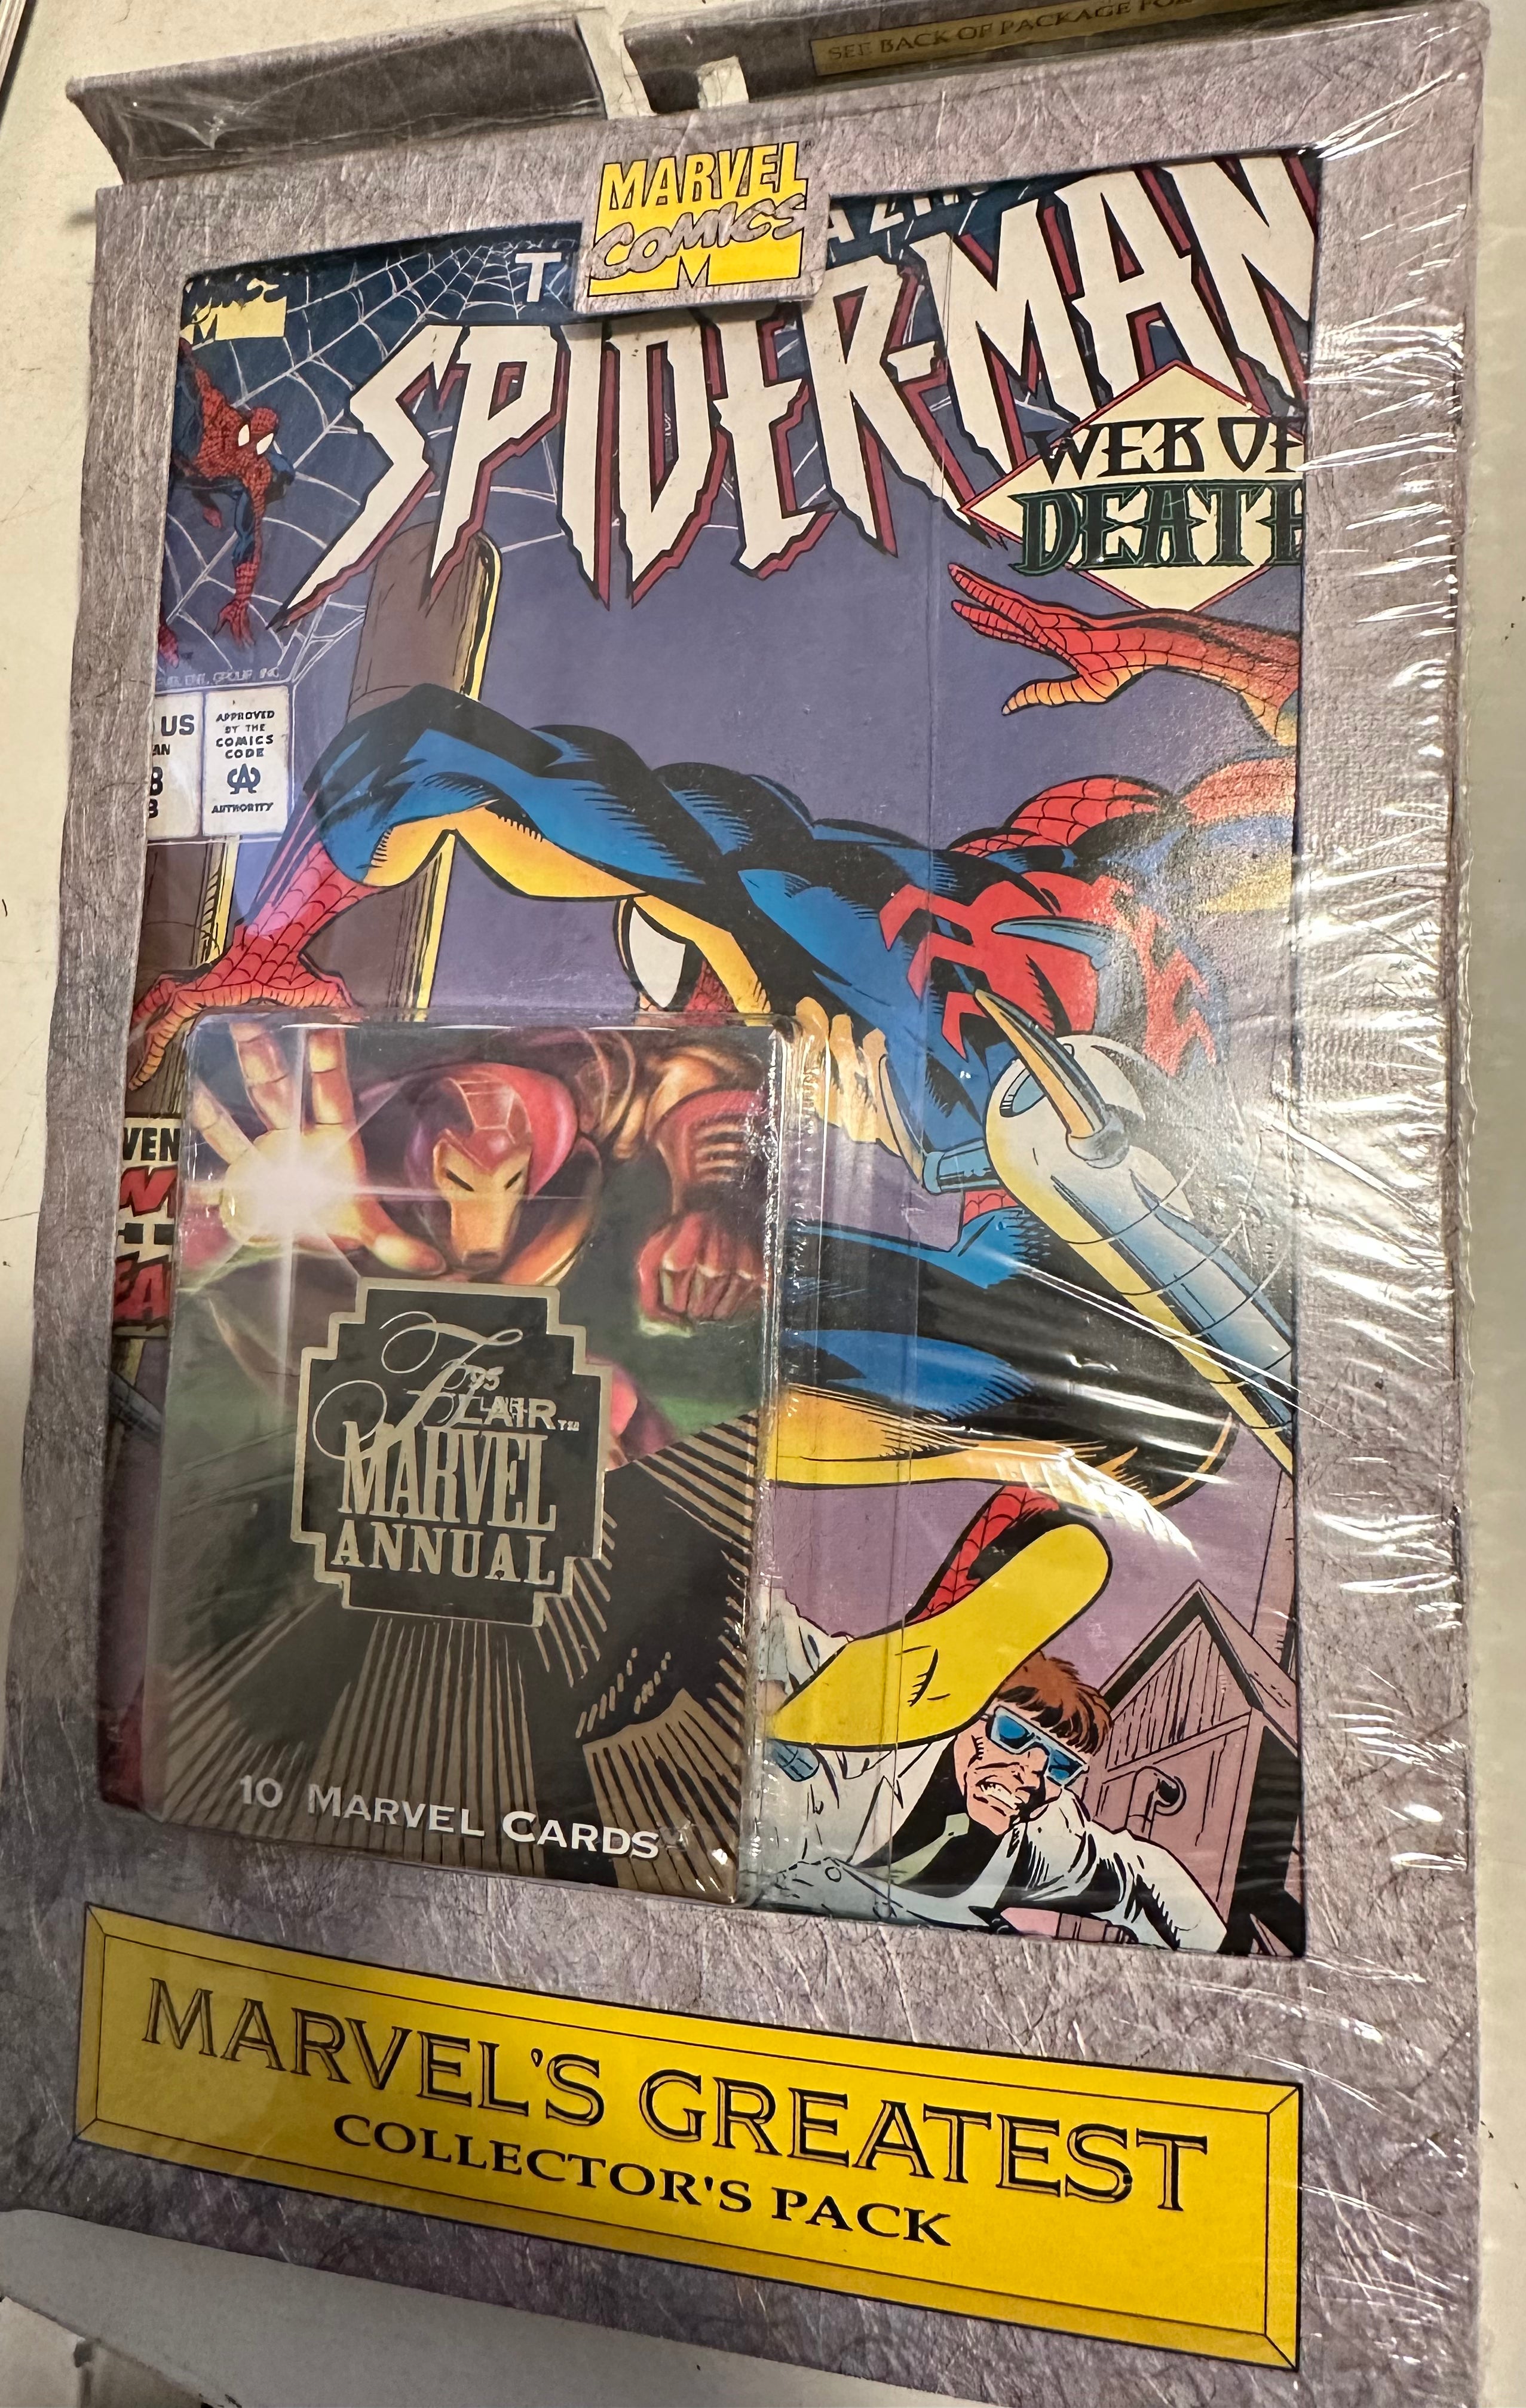 Marvel collectors factory sealed 4 spider-man vintage comics pack with Marvel fleer flair cards pack! 1990s